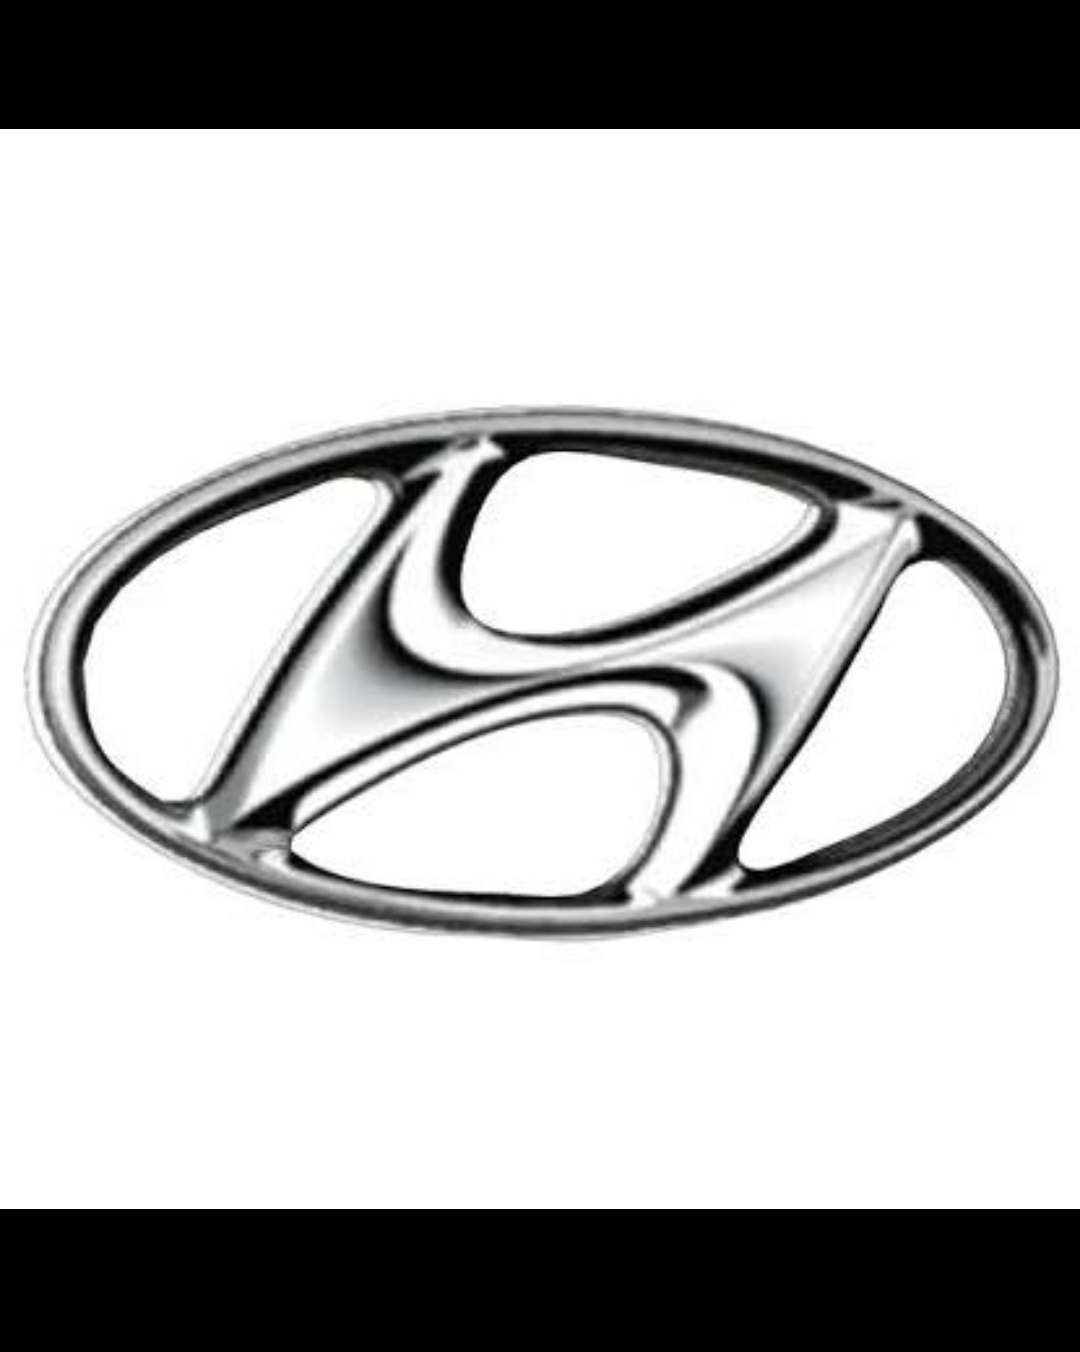 Hyundai Accent IV 1.6 GLS Fluid Auto